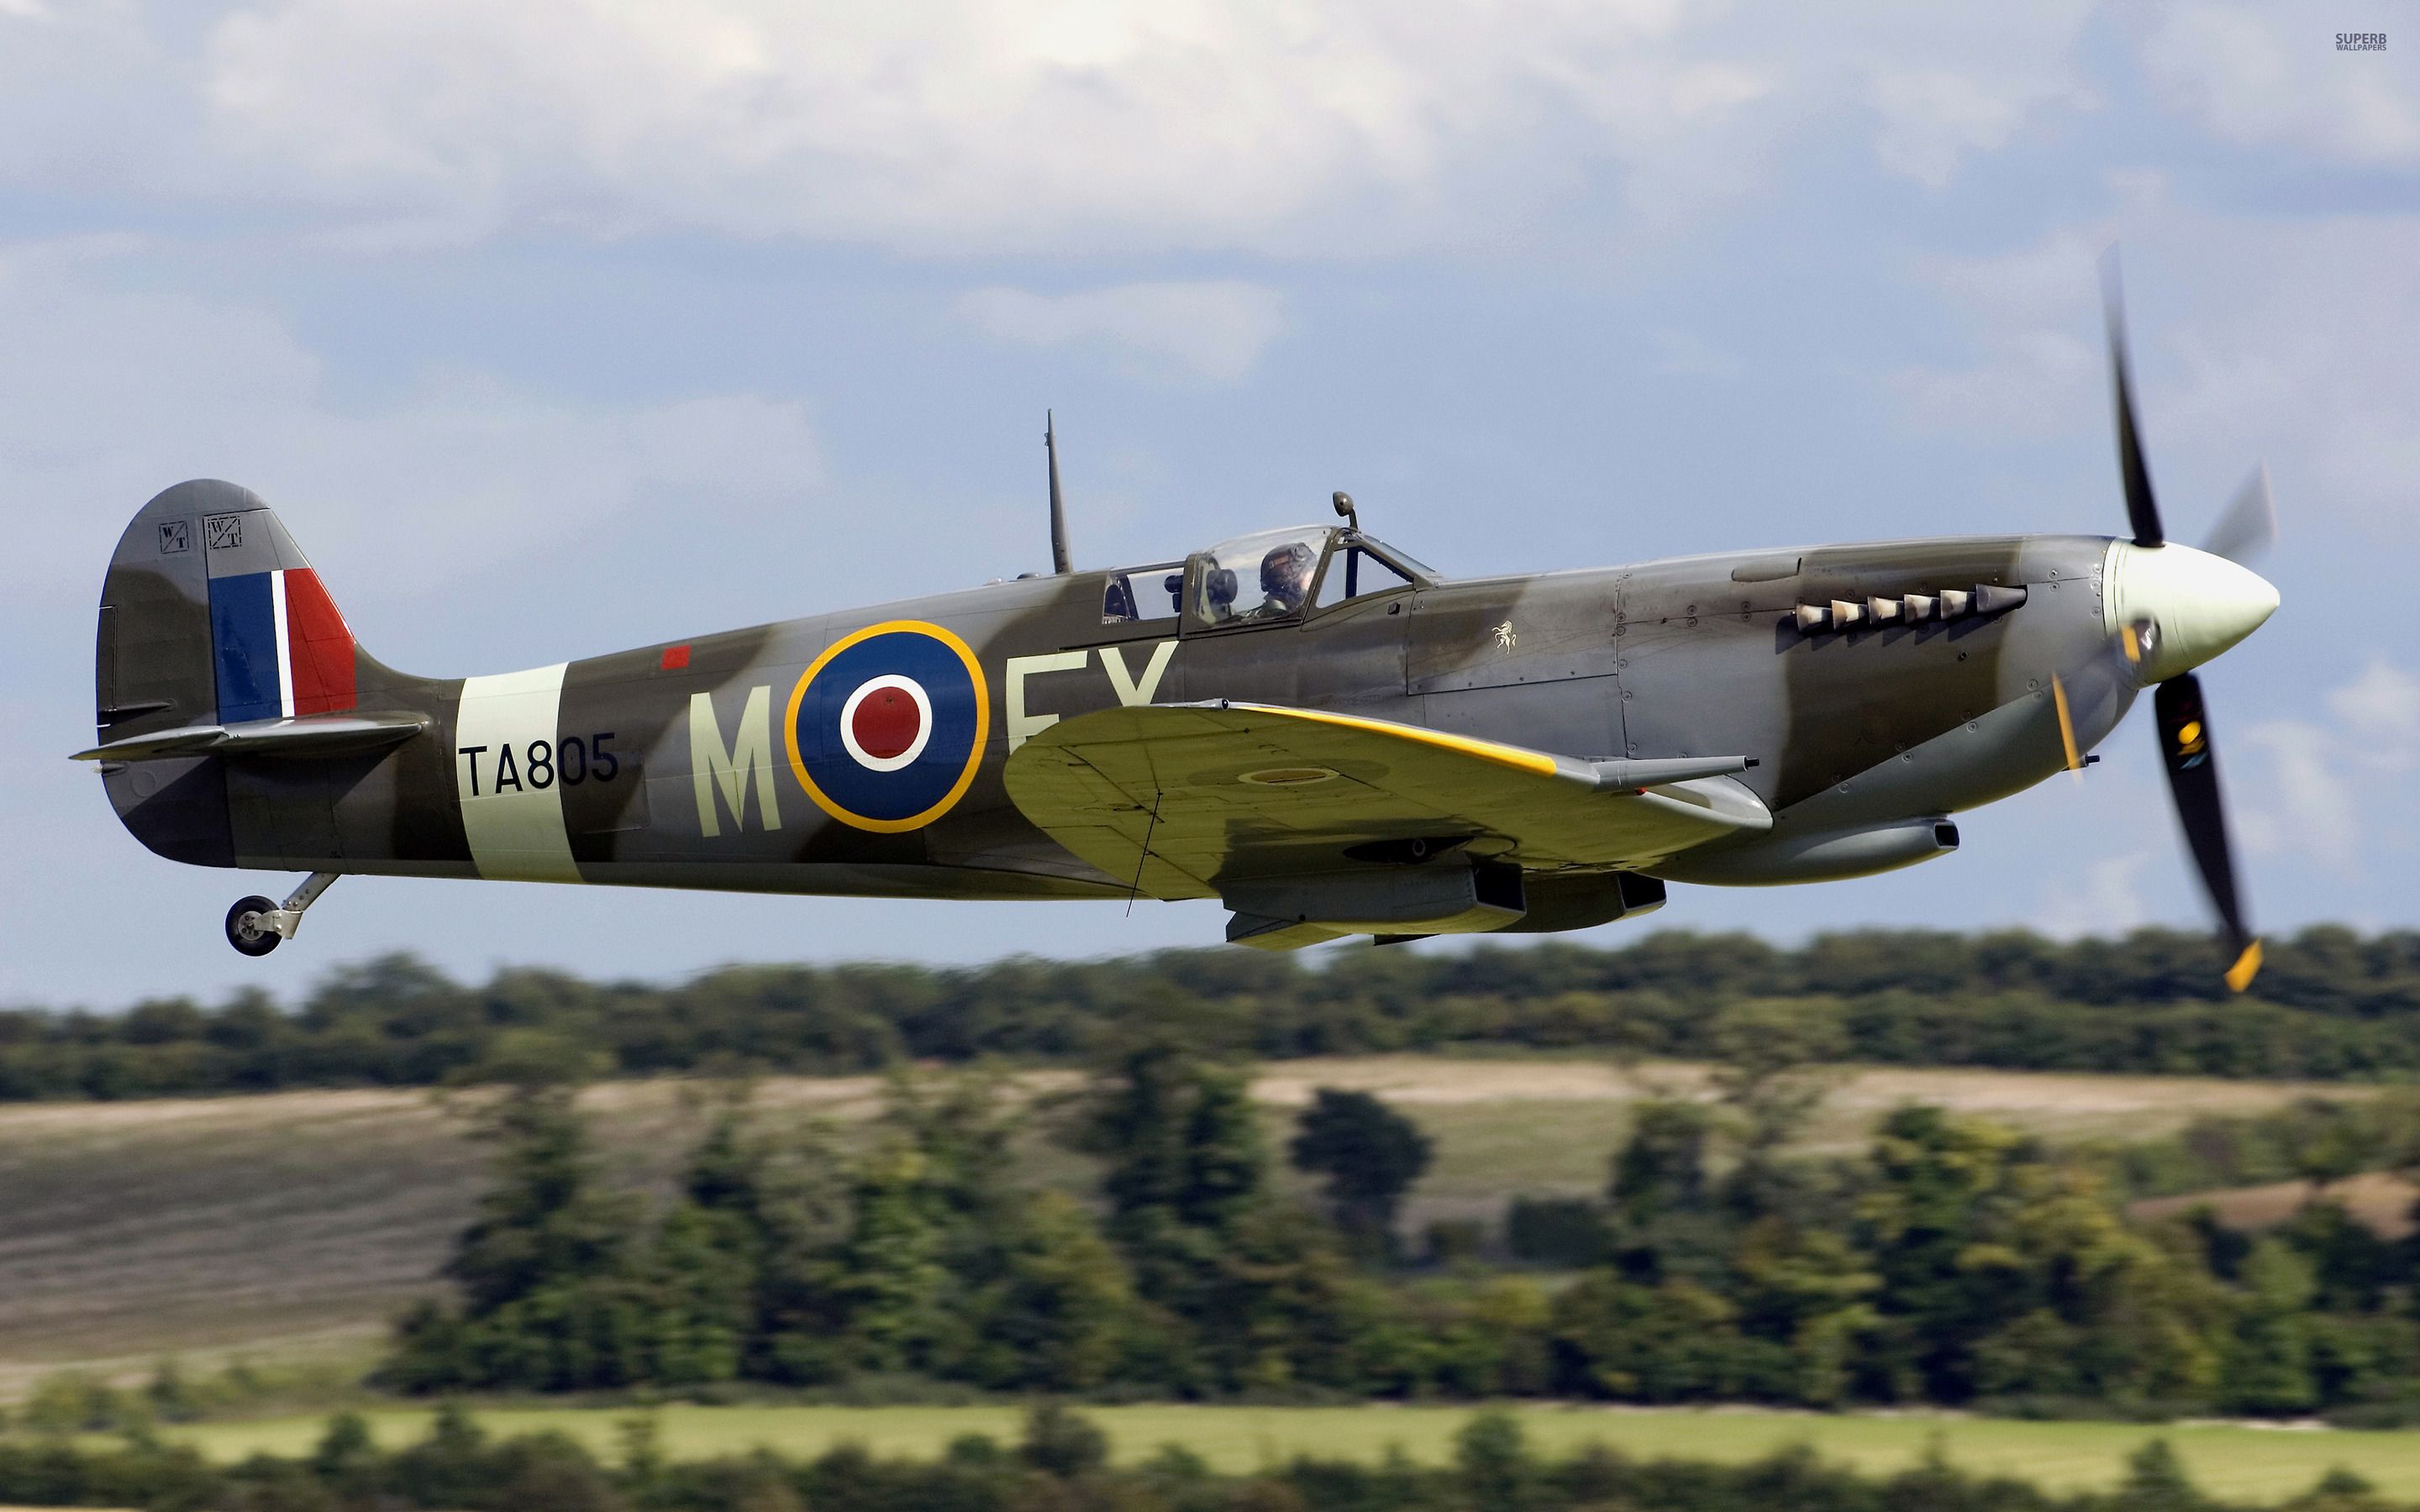 Supermarine Spitfire wallpaper - Aircraft wallpapers - #33755